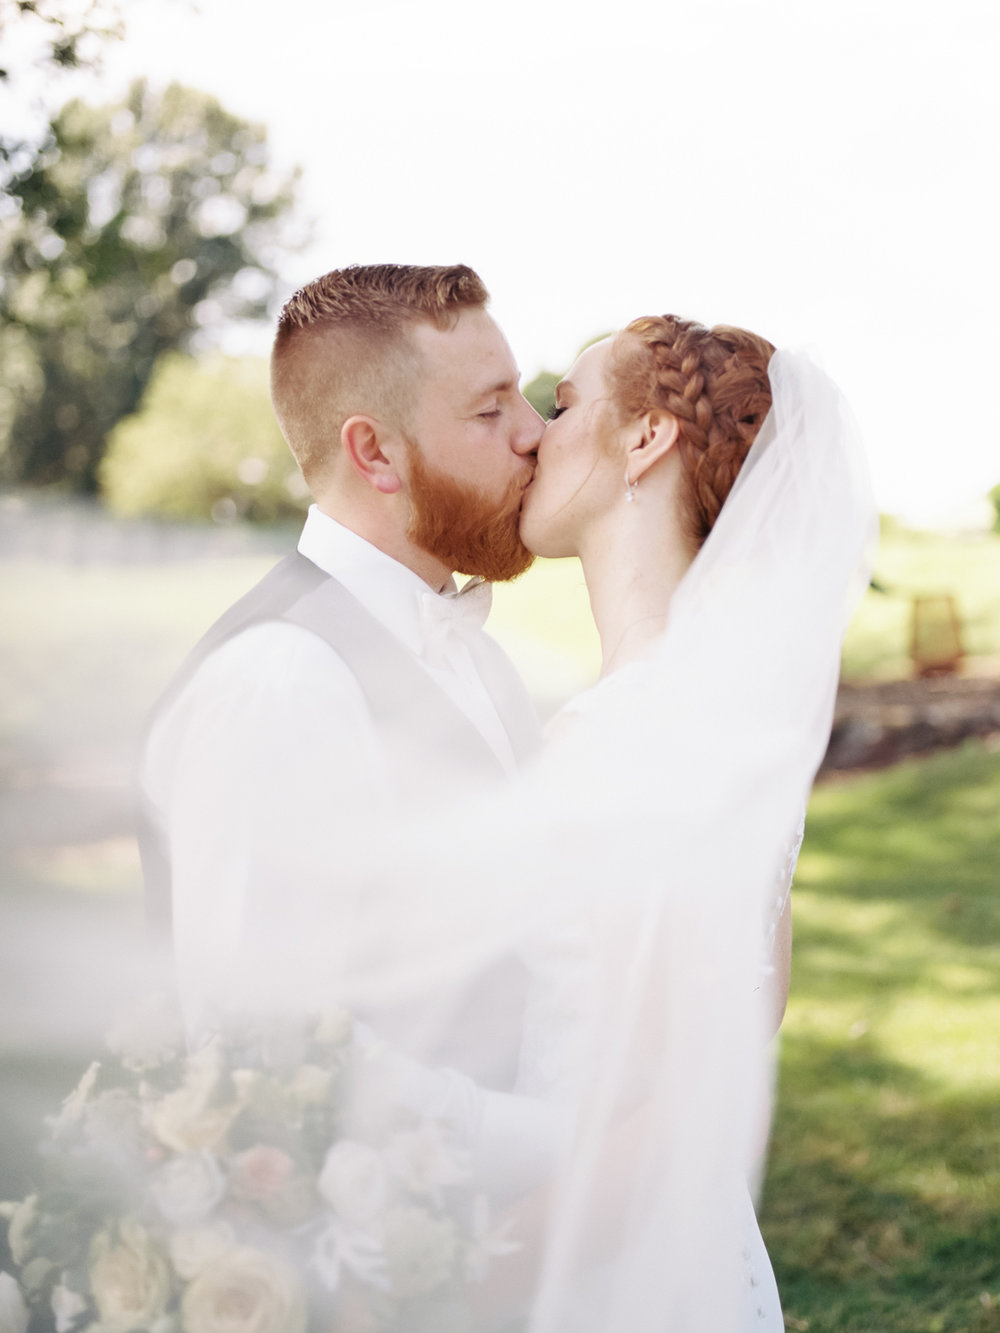 Romantic+Summer+Wedding - Ashland Ohio - Matt Erickson Photography